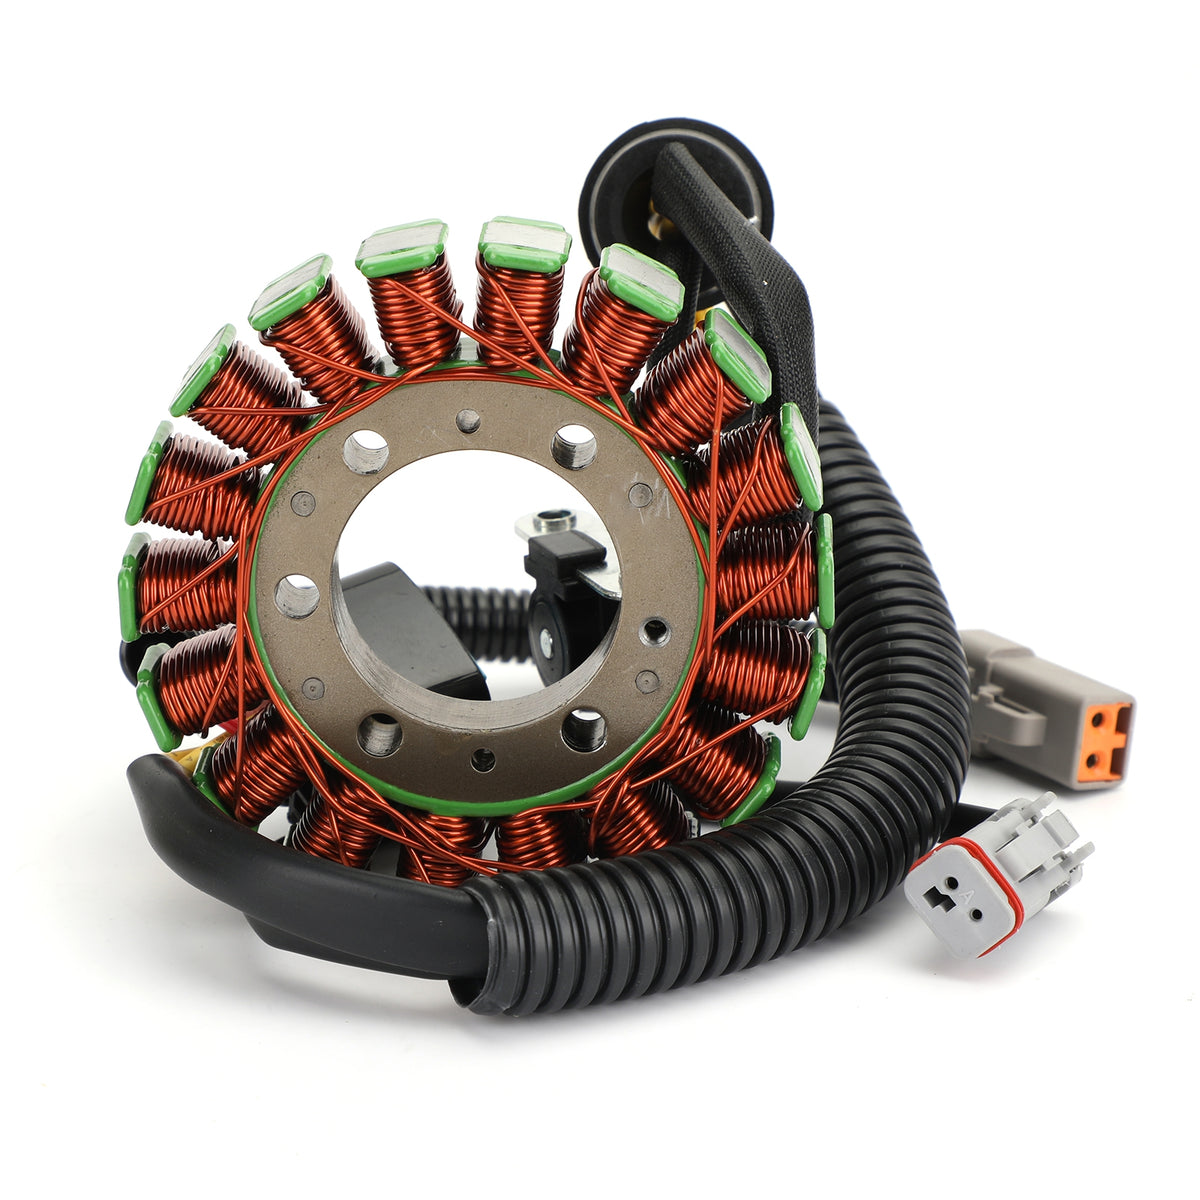 Generatore statore per Ski-Doo MX Z 600RS 09-17 Lynx Rave RS 600 10-14 # 420893060 tramite fedex